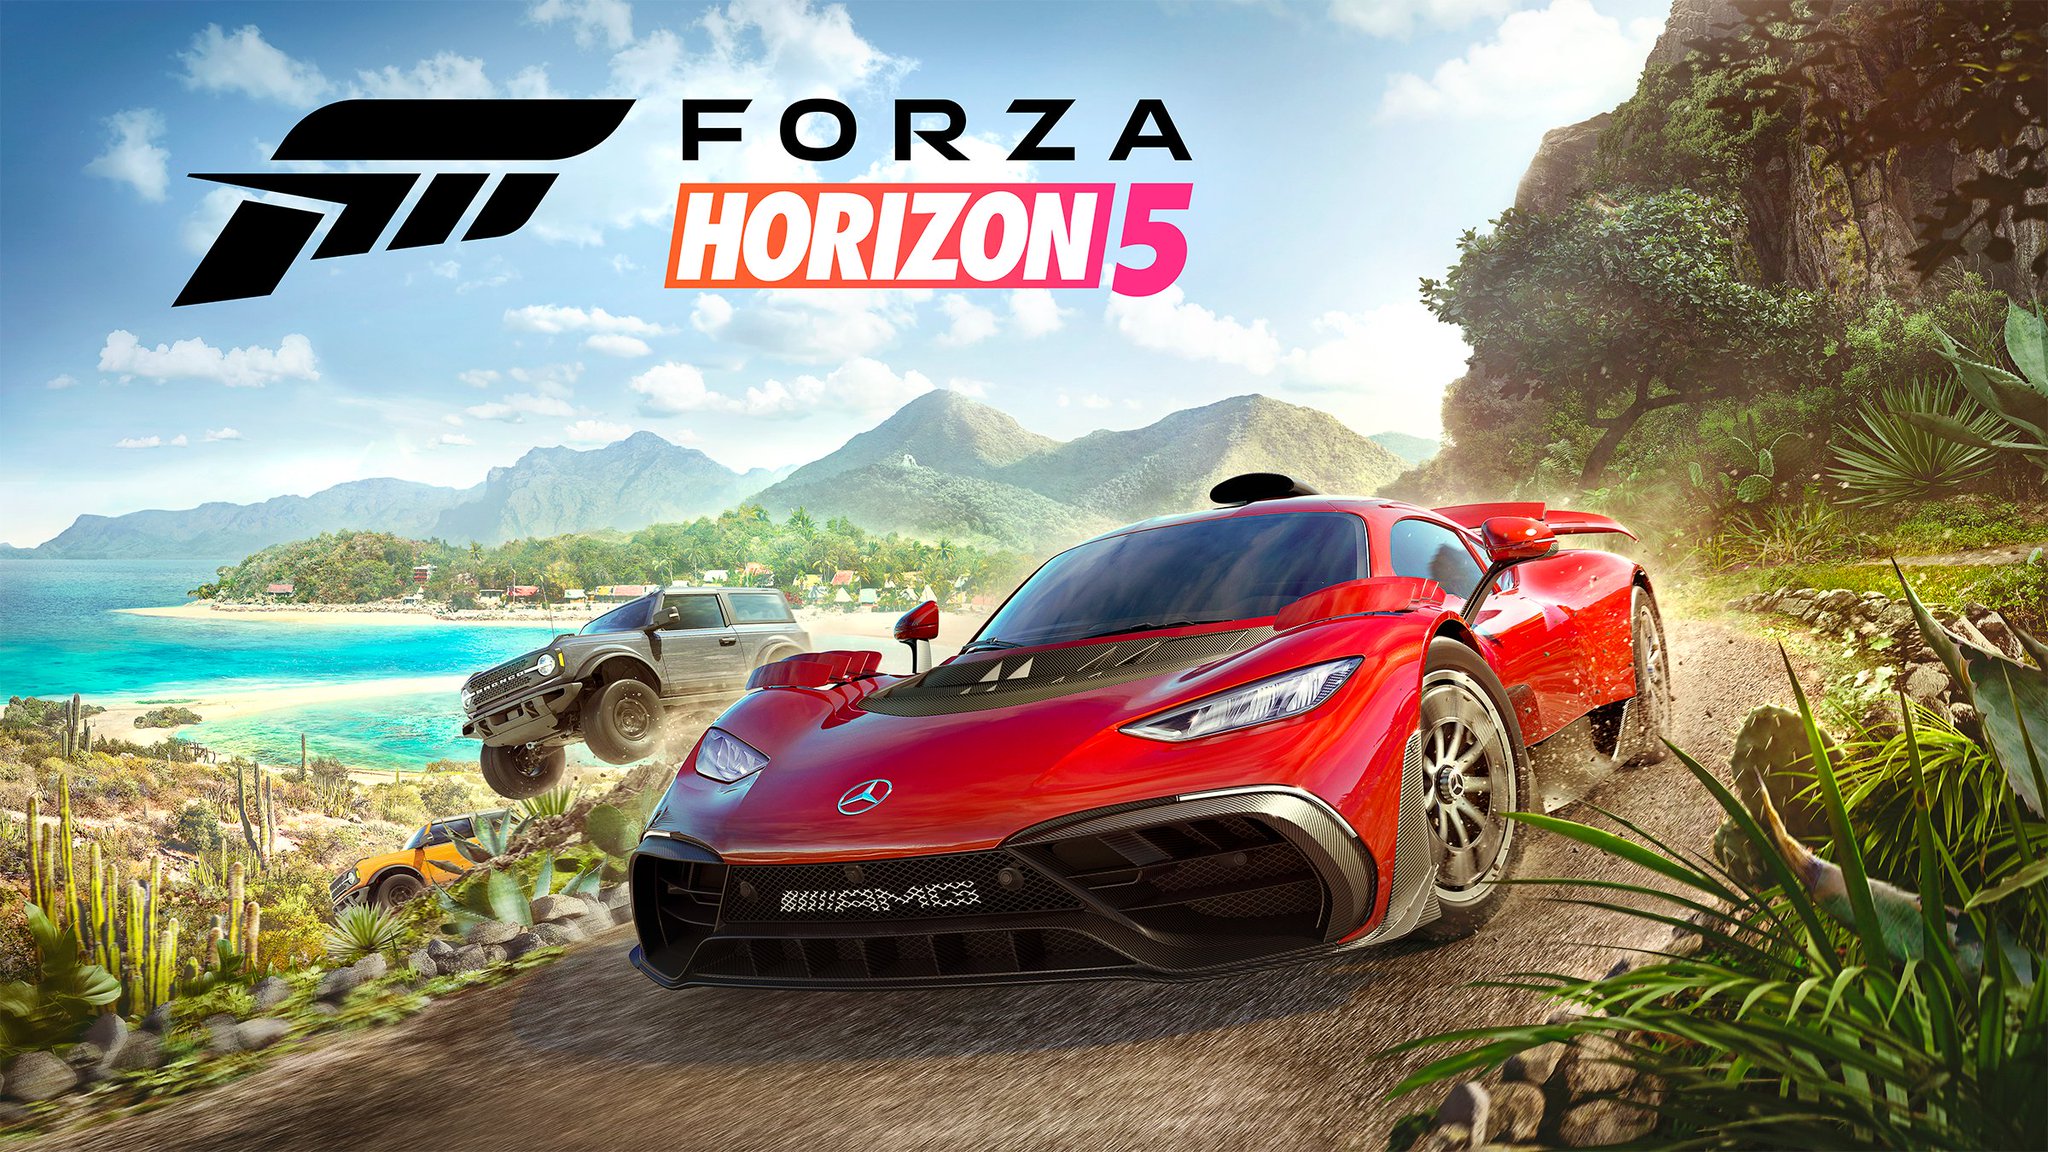 Popular Forza Horizon 5 Image for Phone